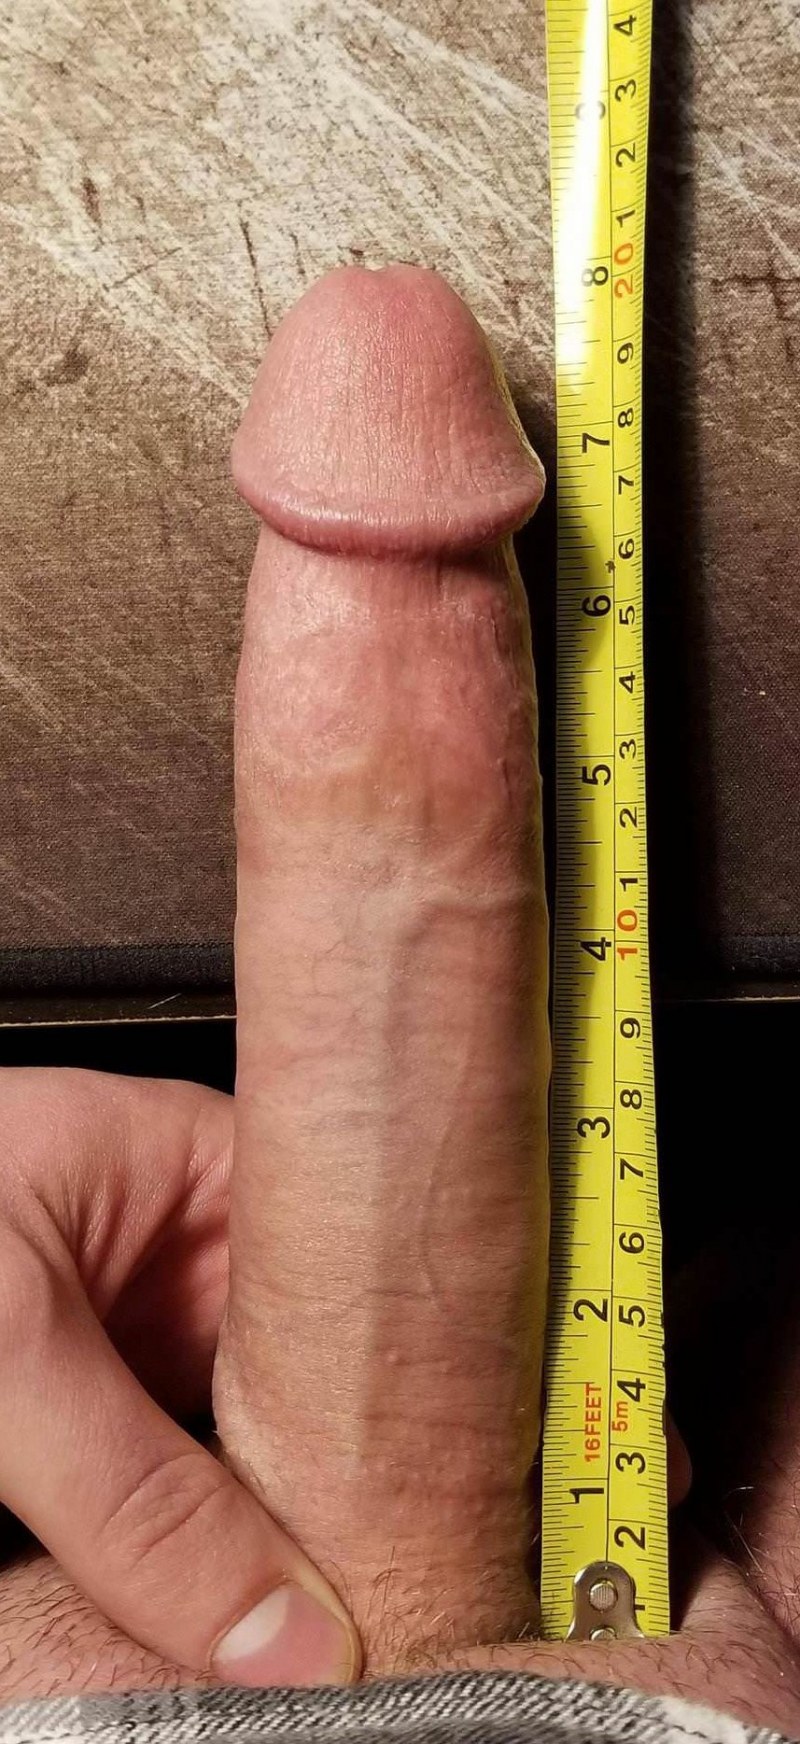 Thin 5 inch dick